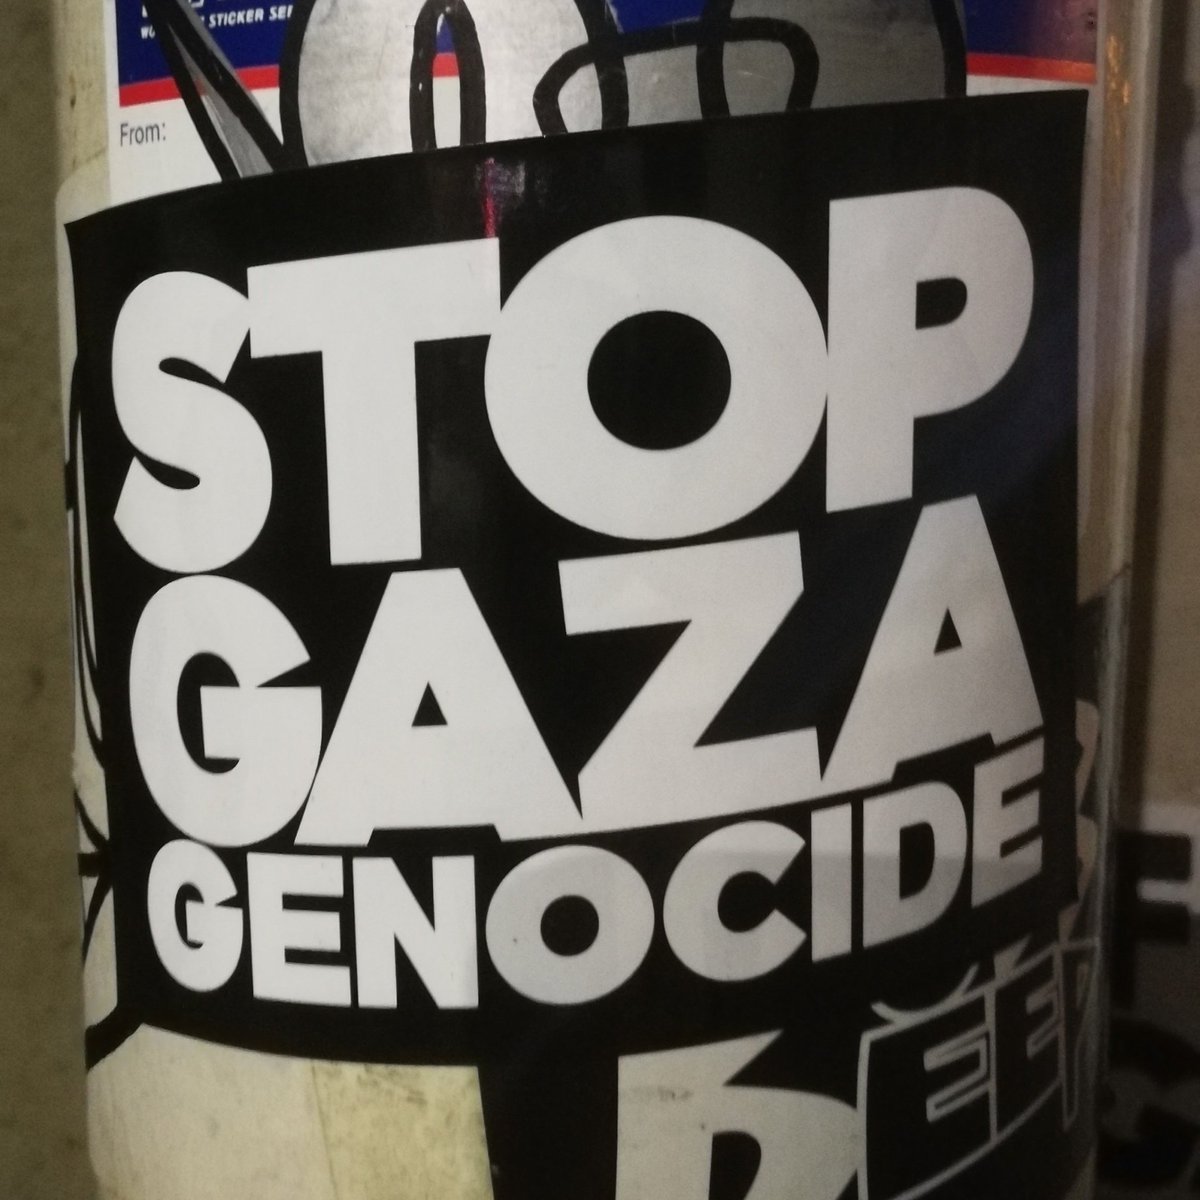 #StopTheGenocide #StopGazaGencide